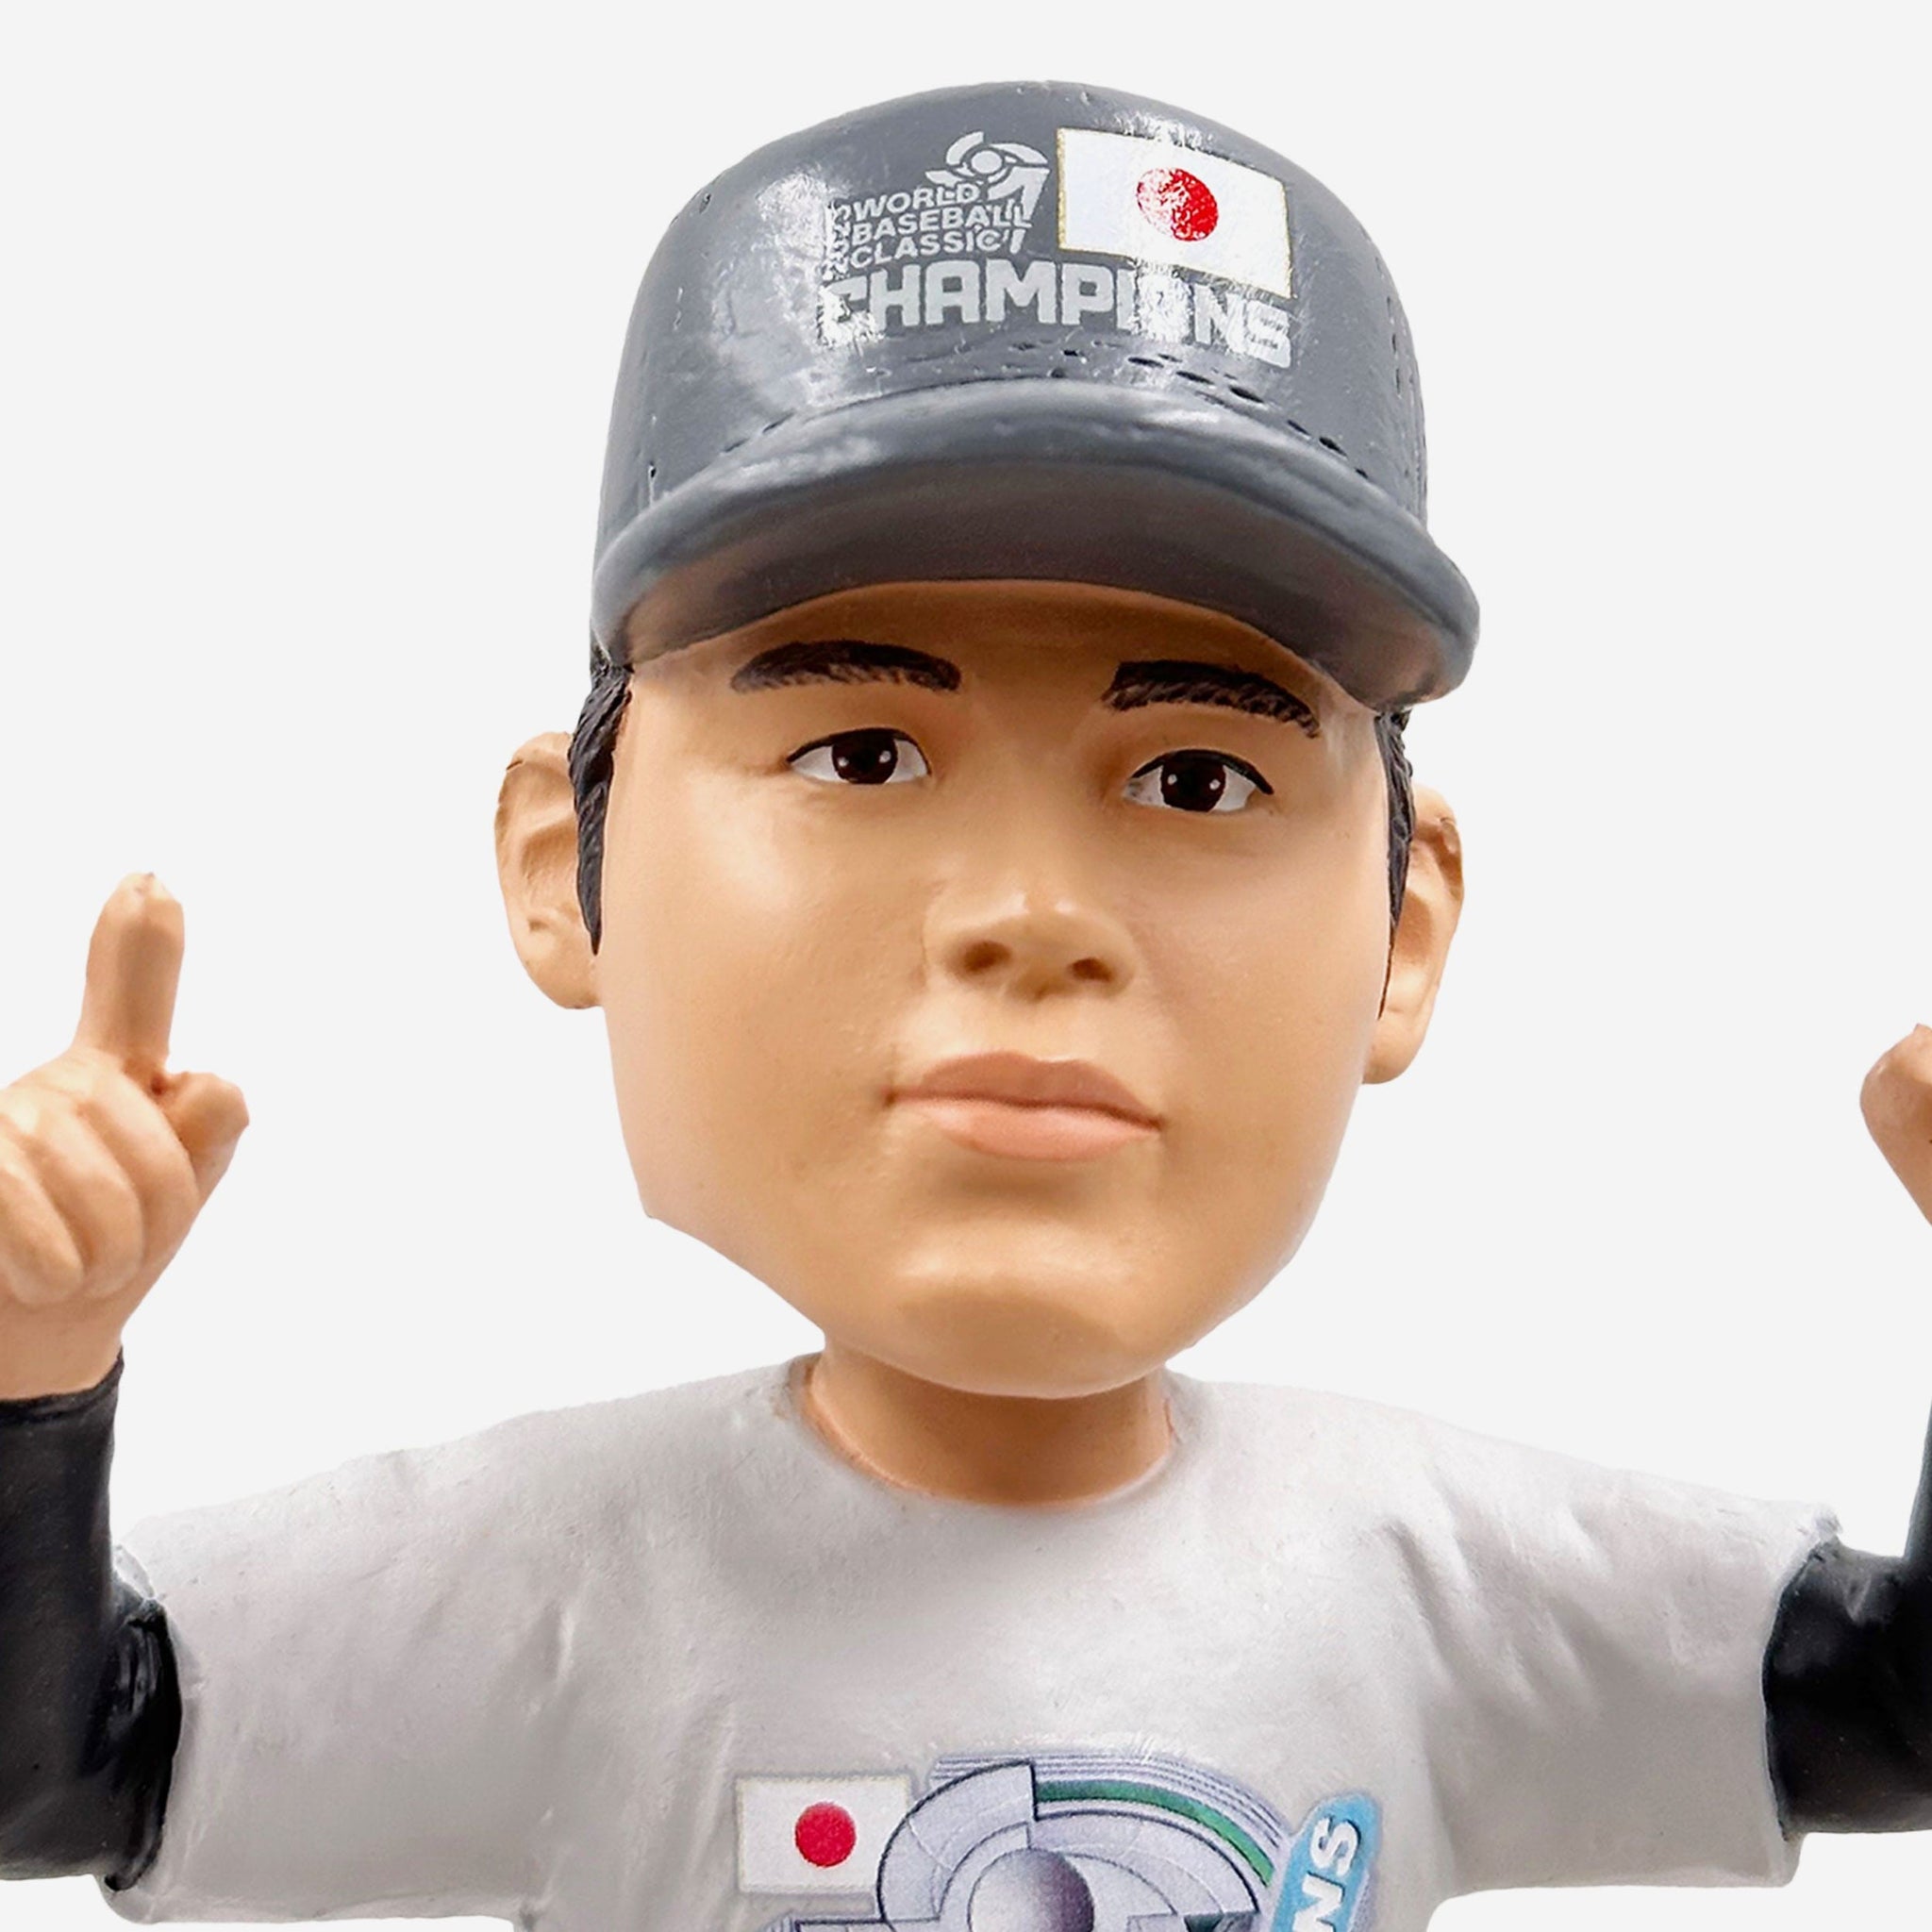 Men's Shohei Ohtani White Japan Baseball 2023 World Baseball Classic  Replica Player Jersey